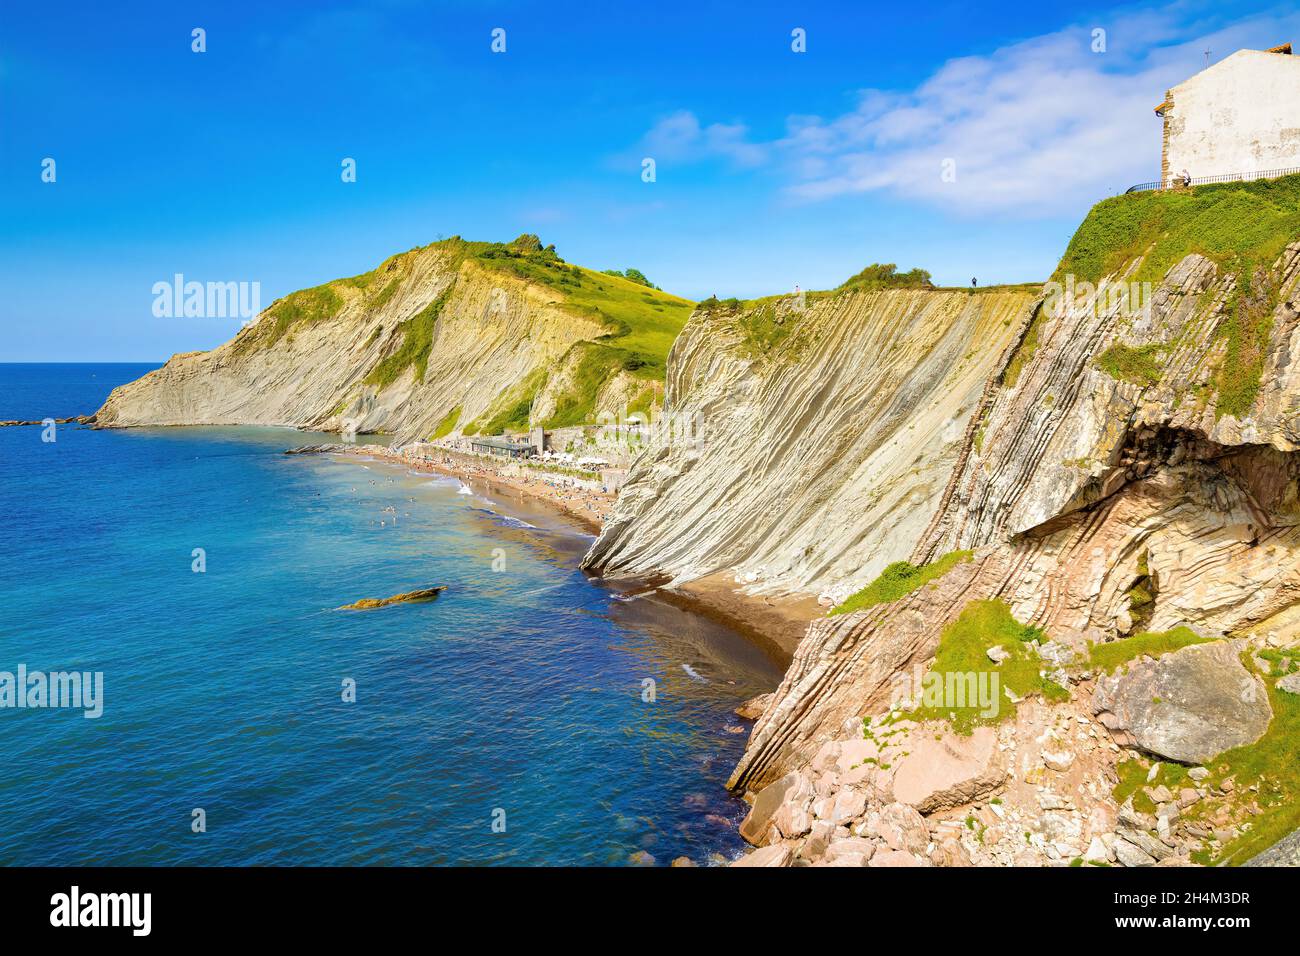 View of the cliff of Izurrun beach with its geological limestone rocks forming layers. Zumaya, Euskadi, Spain Stock Photo